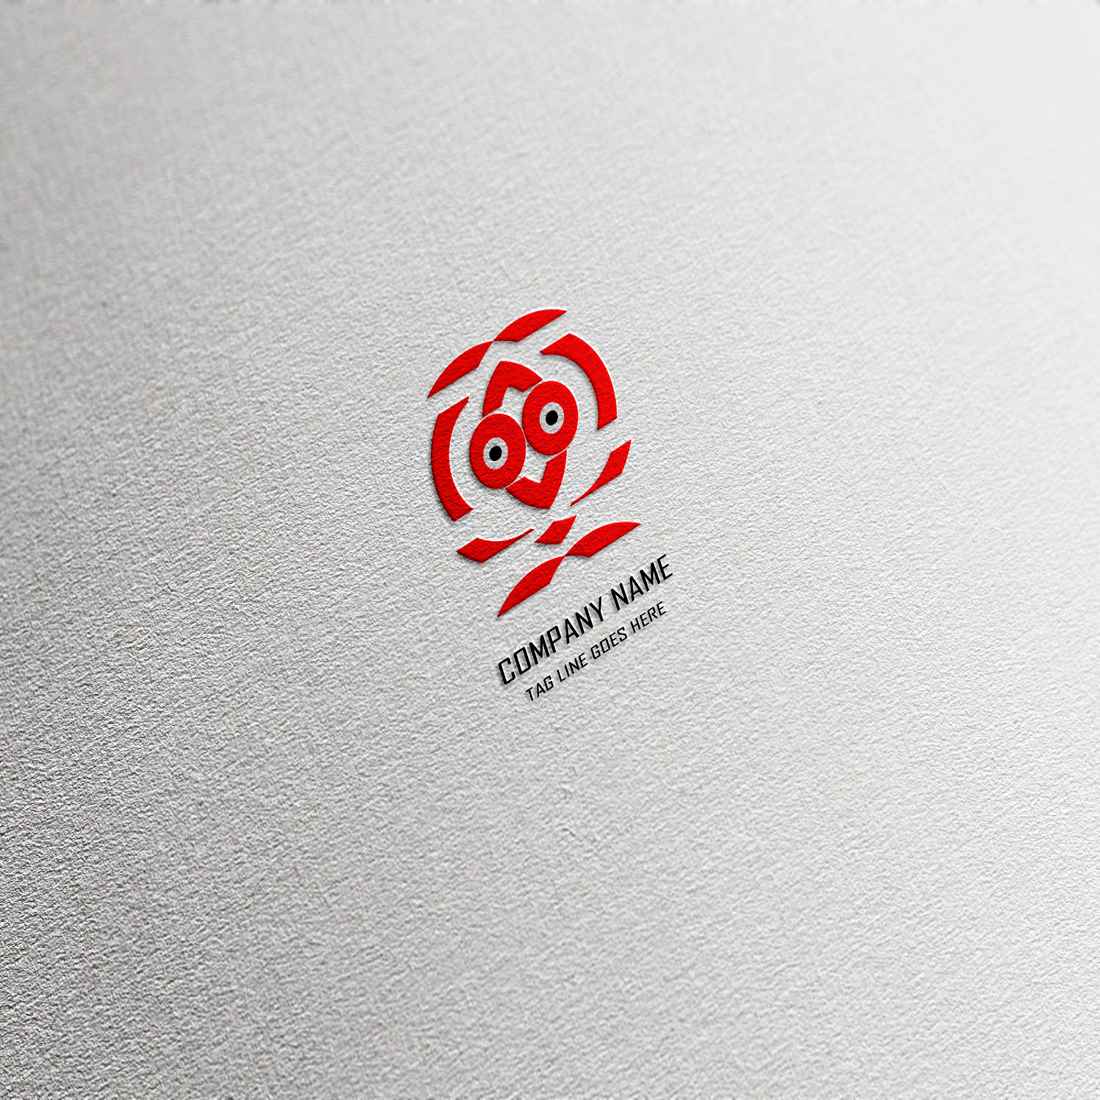 Owl - Logo Design Template cover image.